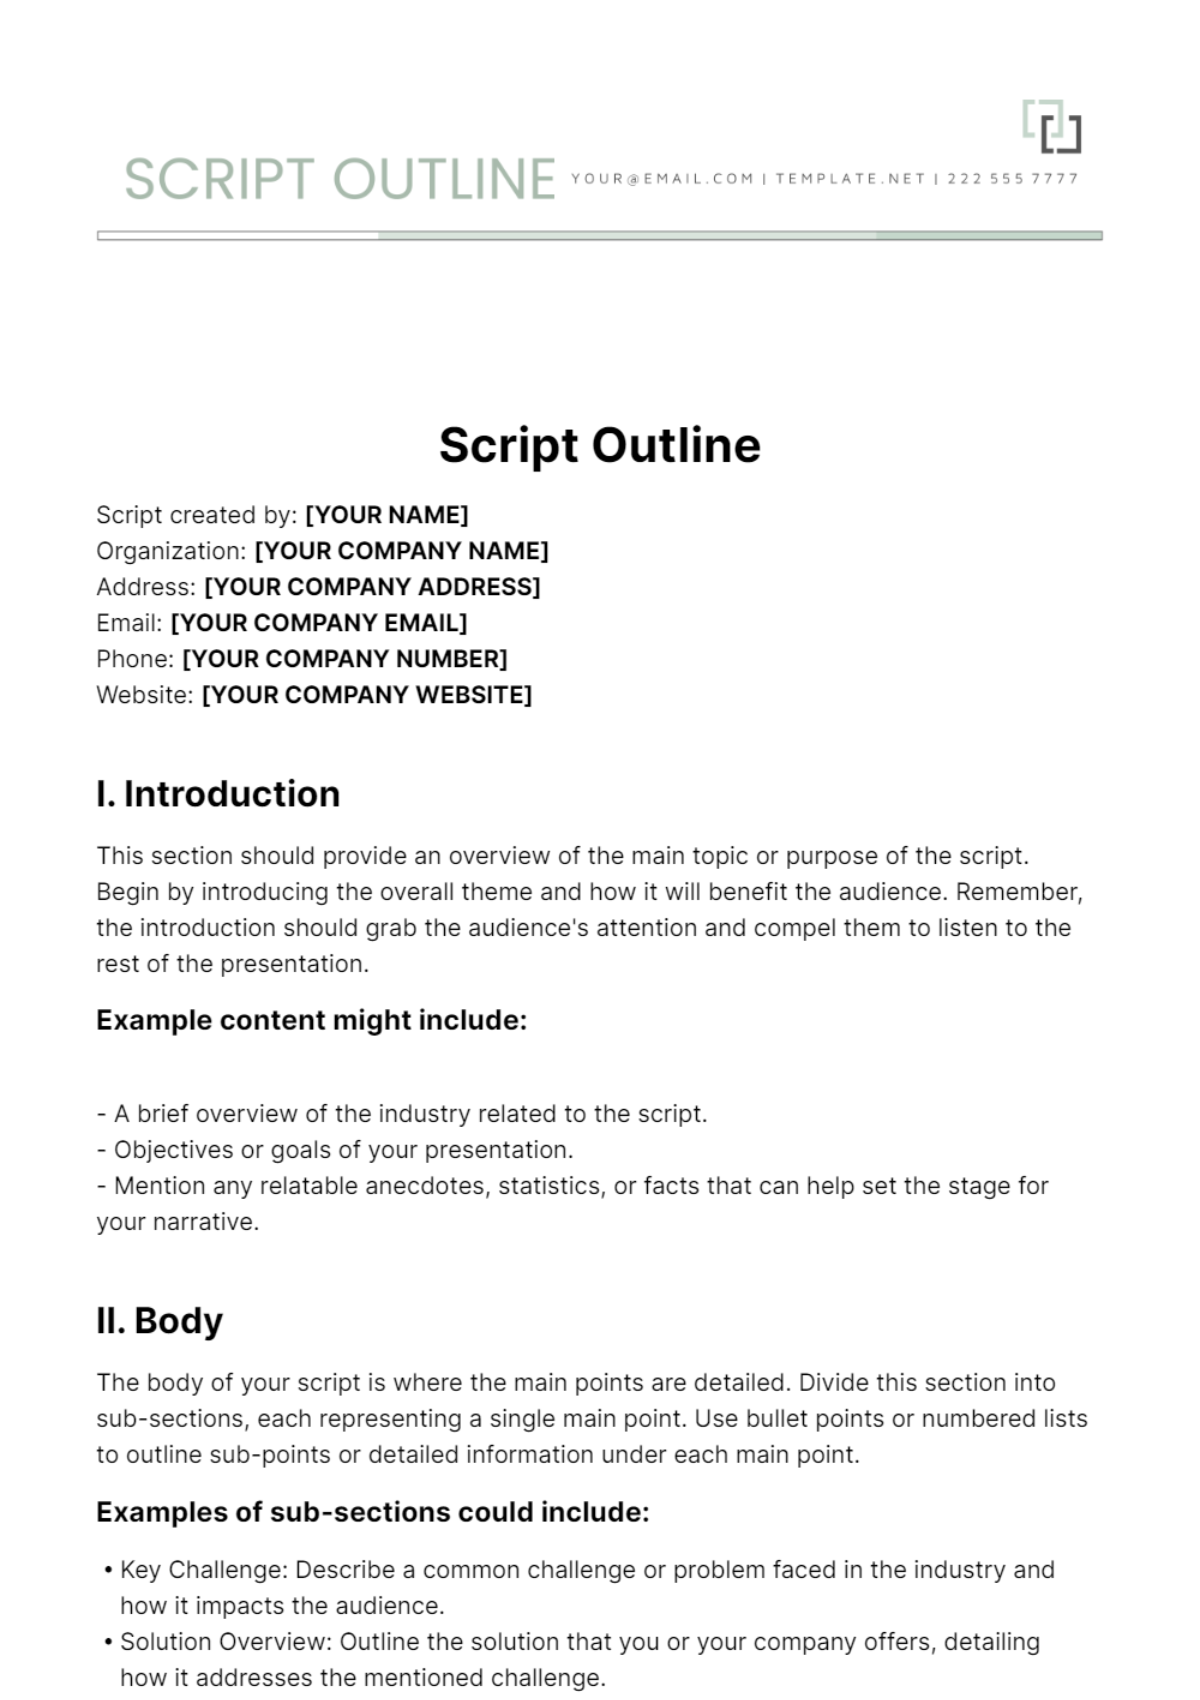 Script Outline Template